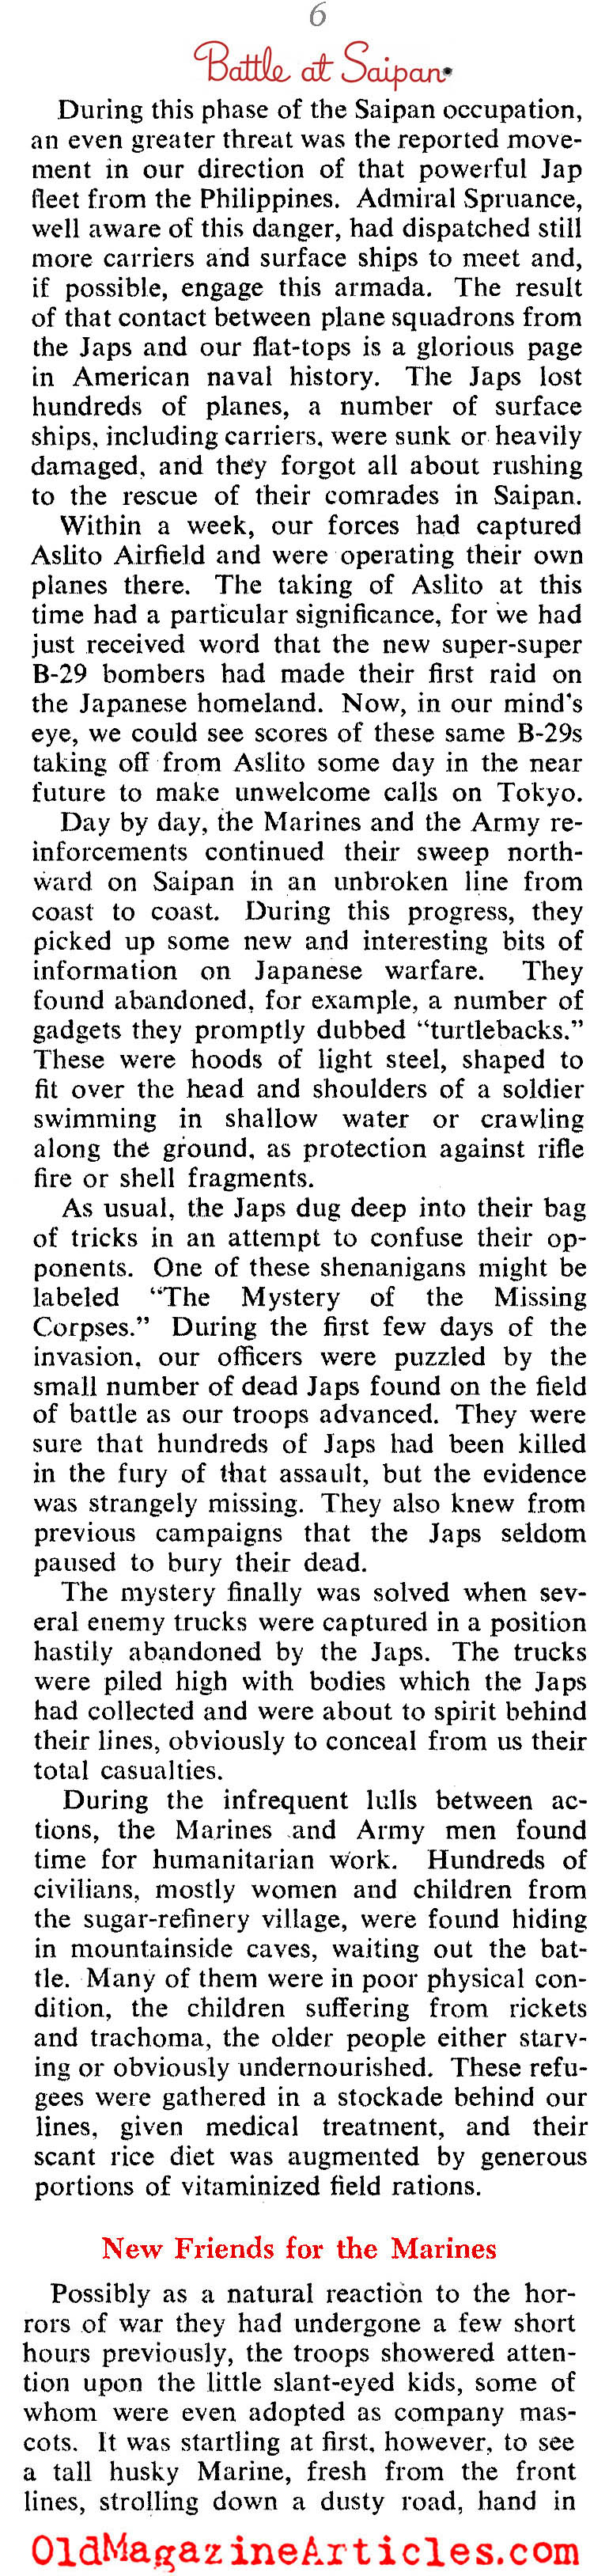 The American Invasion of Saipan (The American Magazine, 1944)